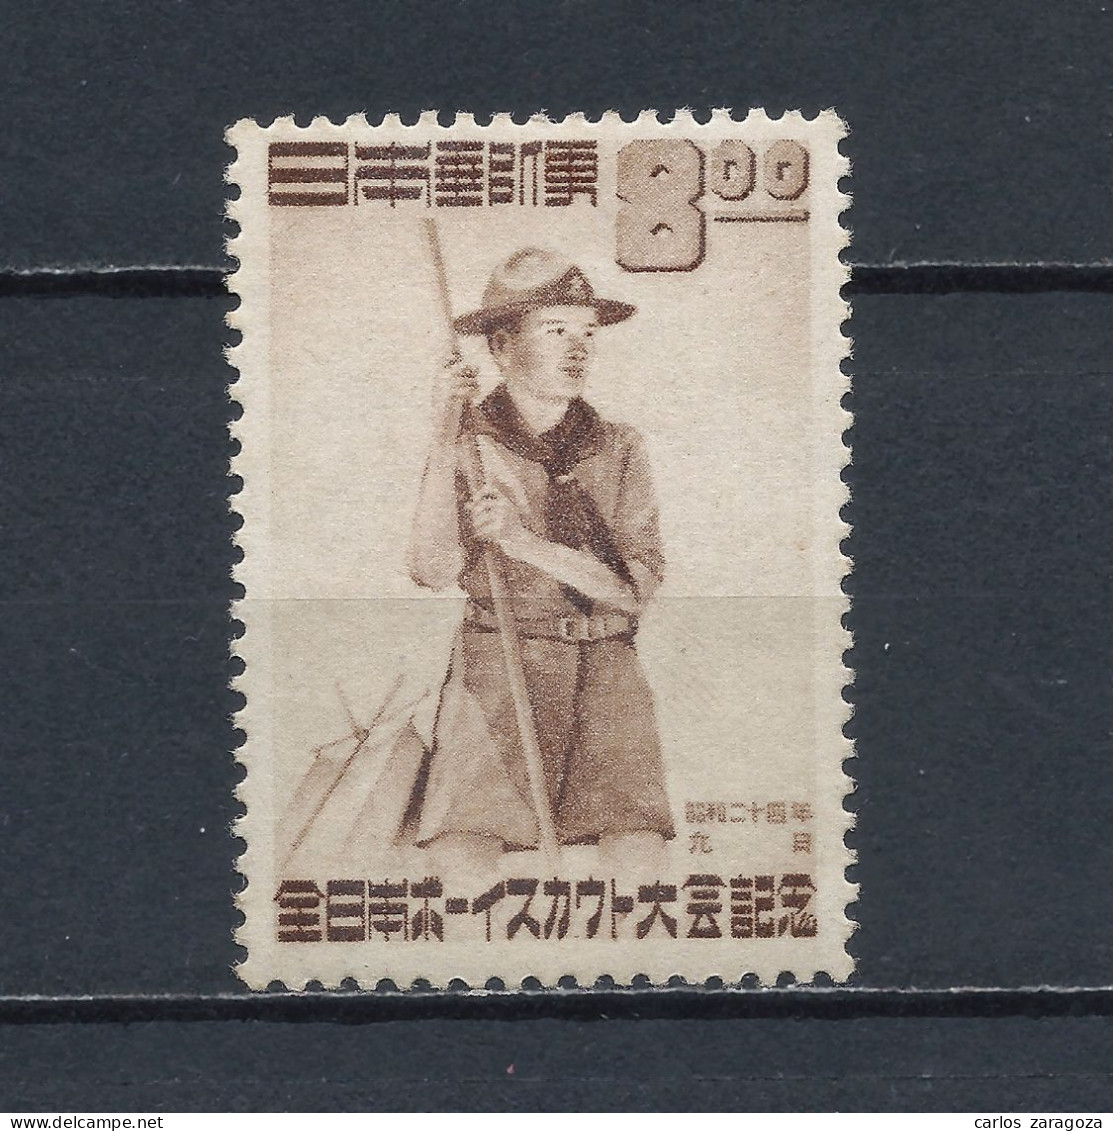 JAPON 1949—SCOUT, JAMBOREE EN TOKIO. 434—SELLO NUEVO (*) MH STAMP 467, TIMBRE NEUF - Nuevos